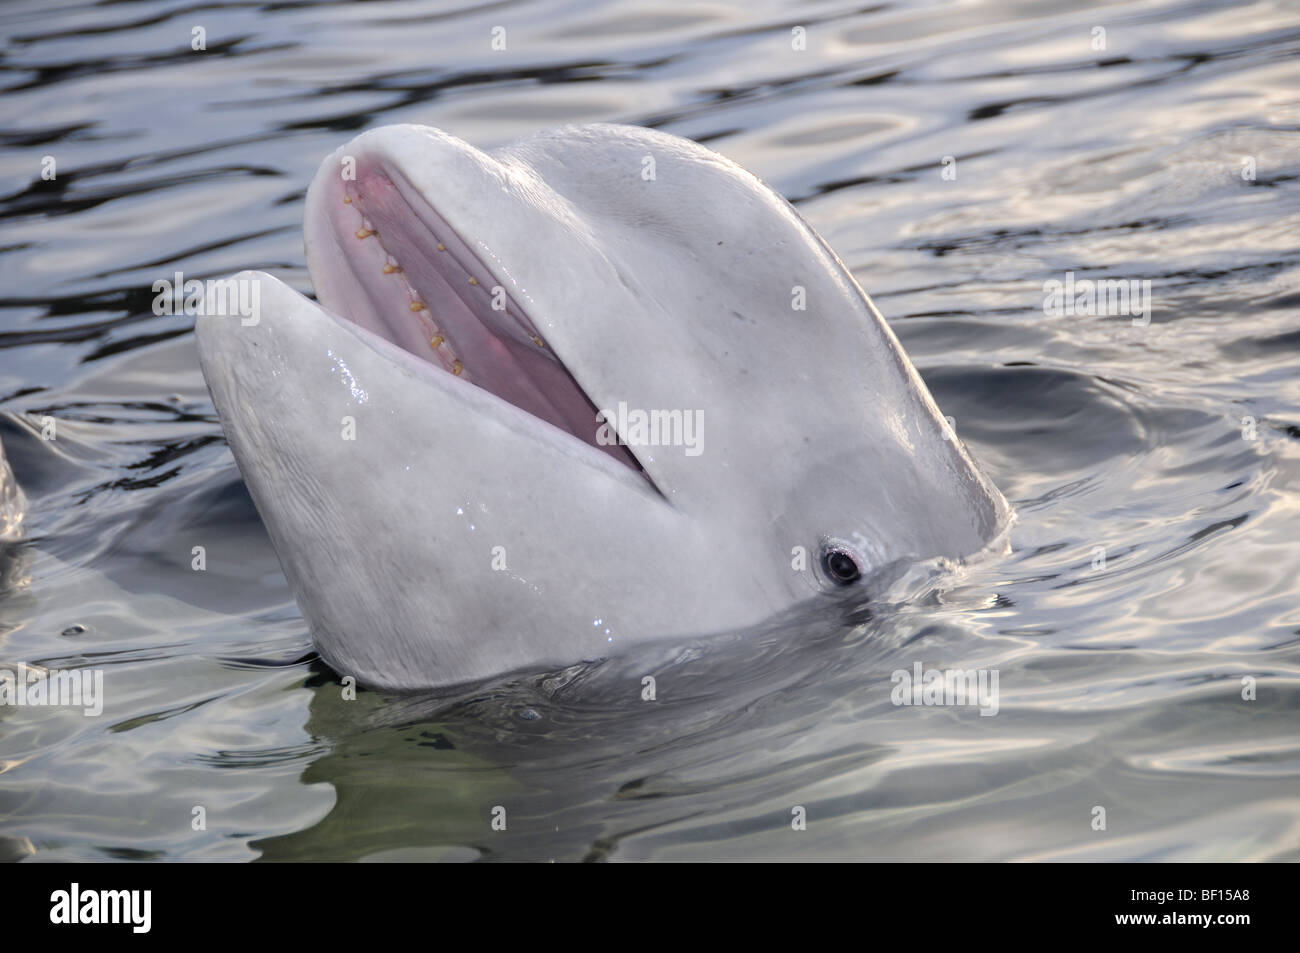 Delphinapterus leucas, White Whale, Beluga, Outdoor Delphinarium, belukha, Sea Canary, White Sea, Russia Stock Photo